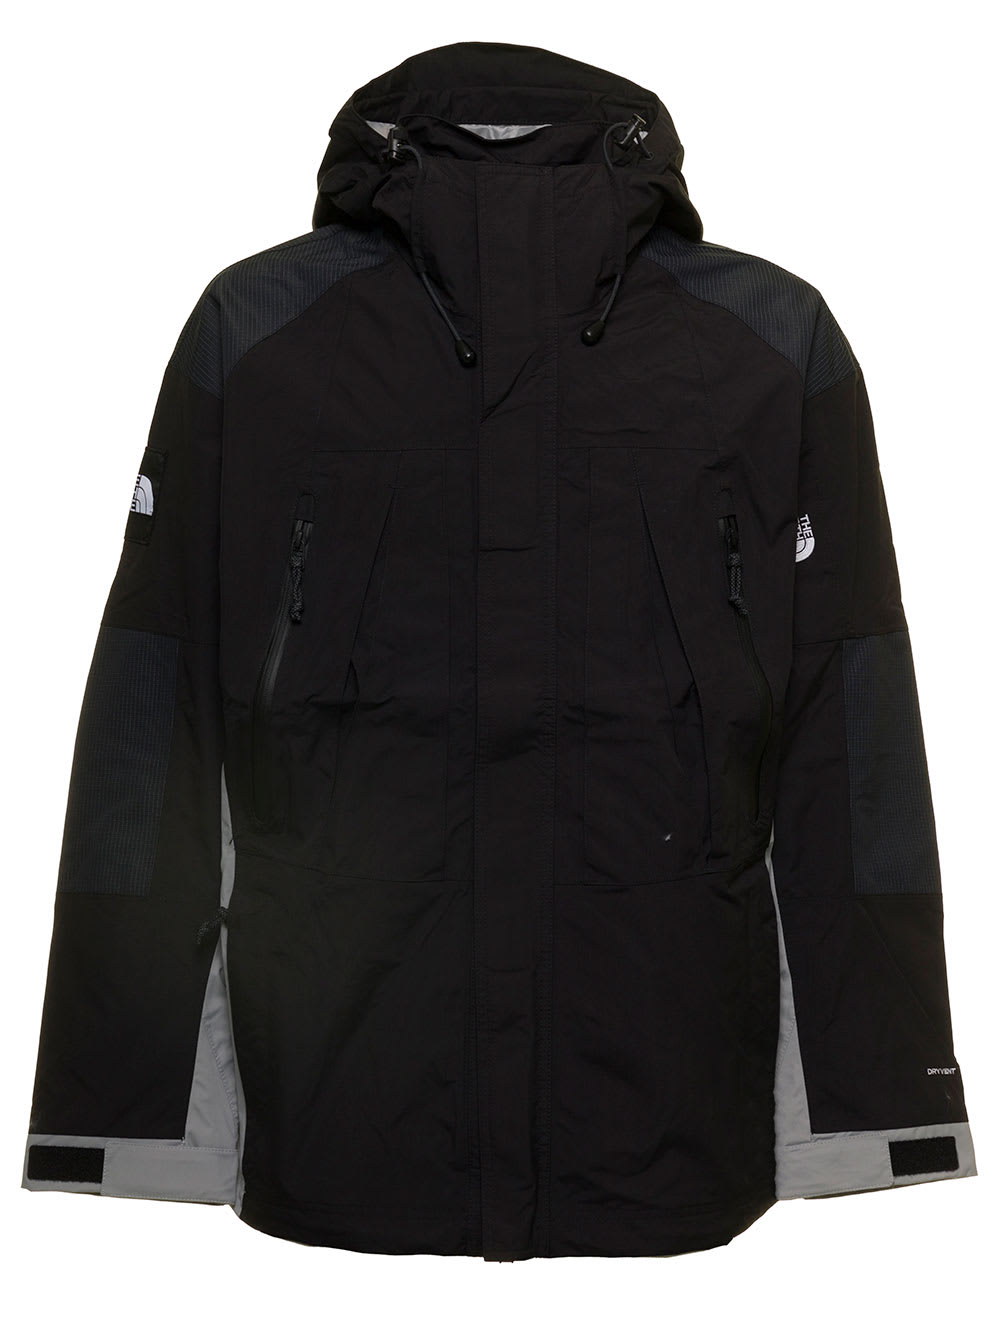 The North Face Mens Black And Grey Nylon Phlego Jacket